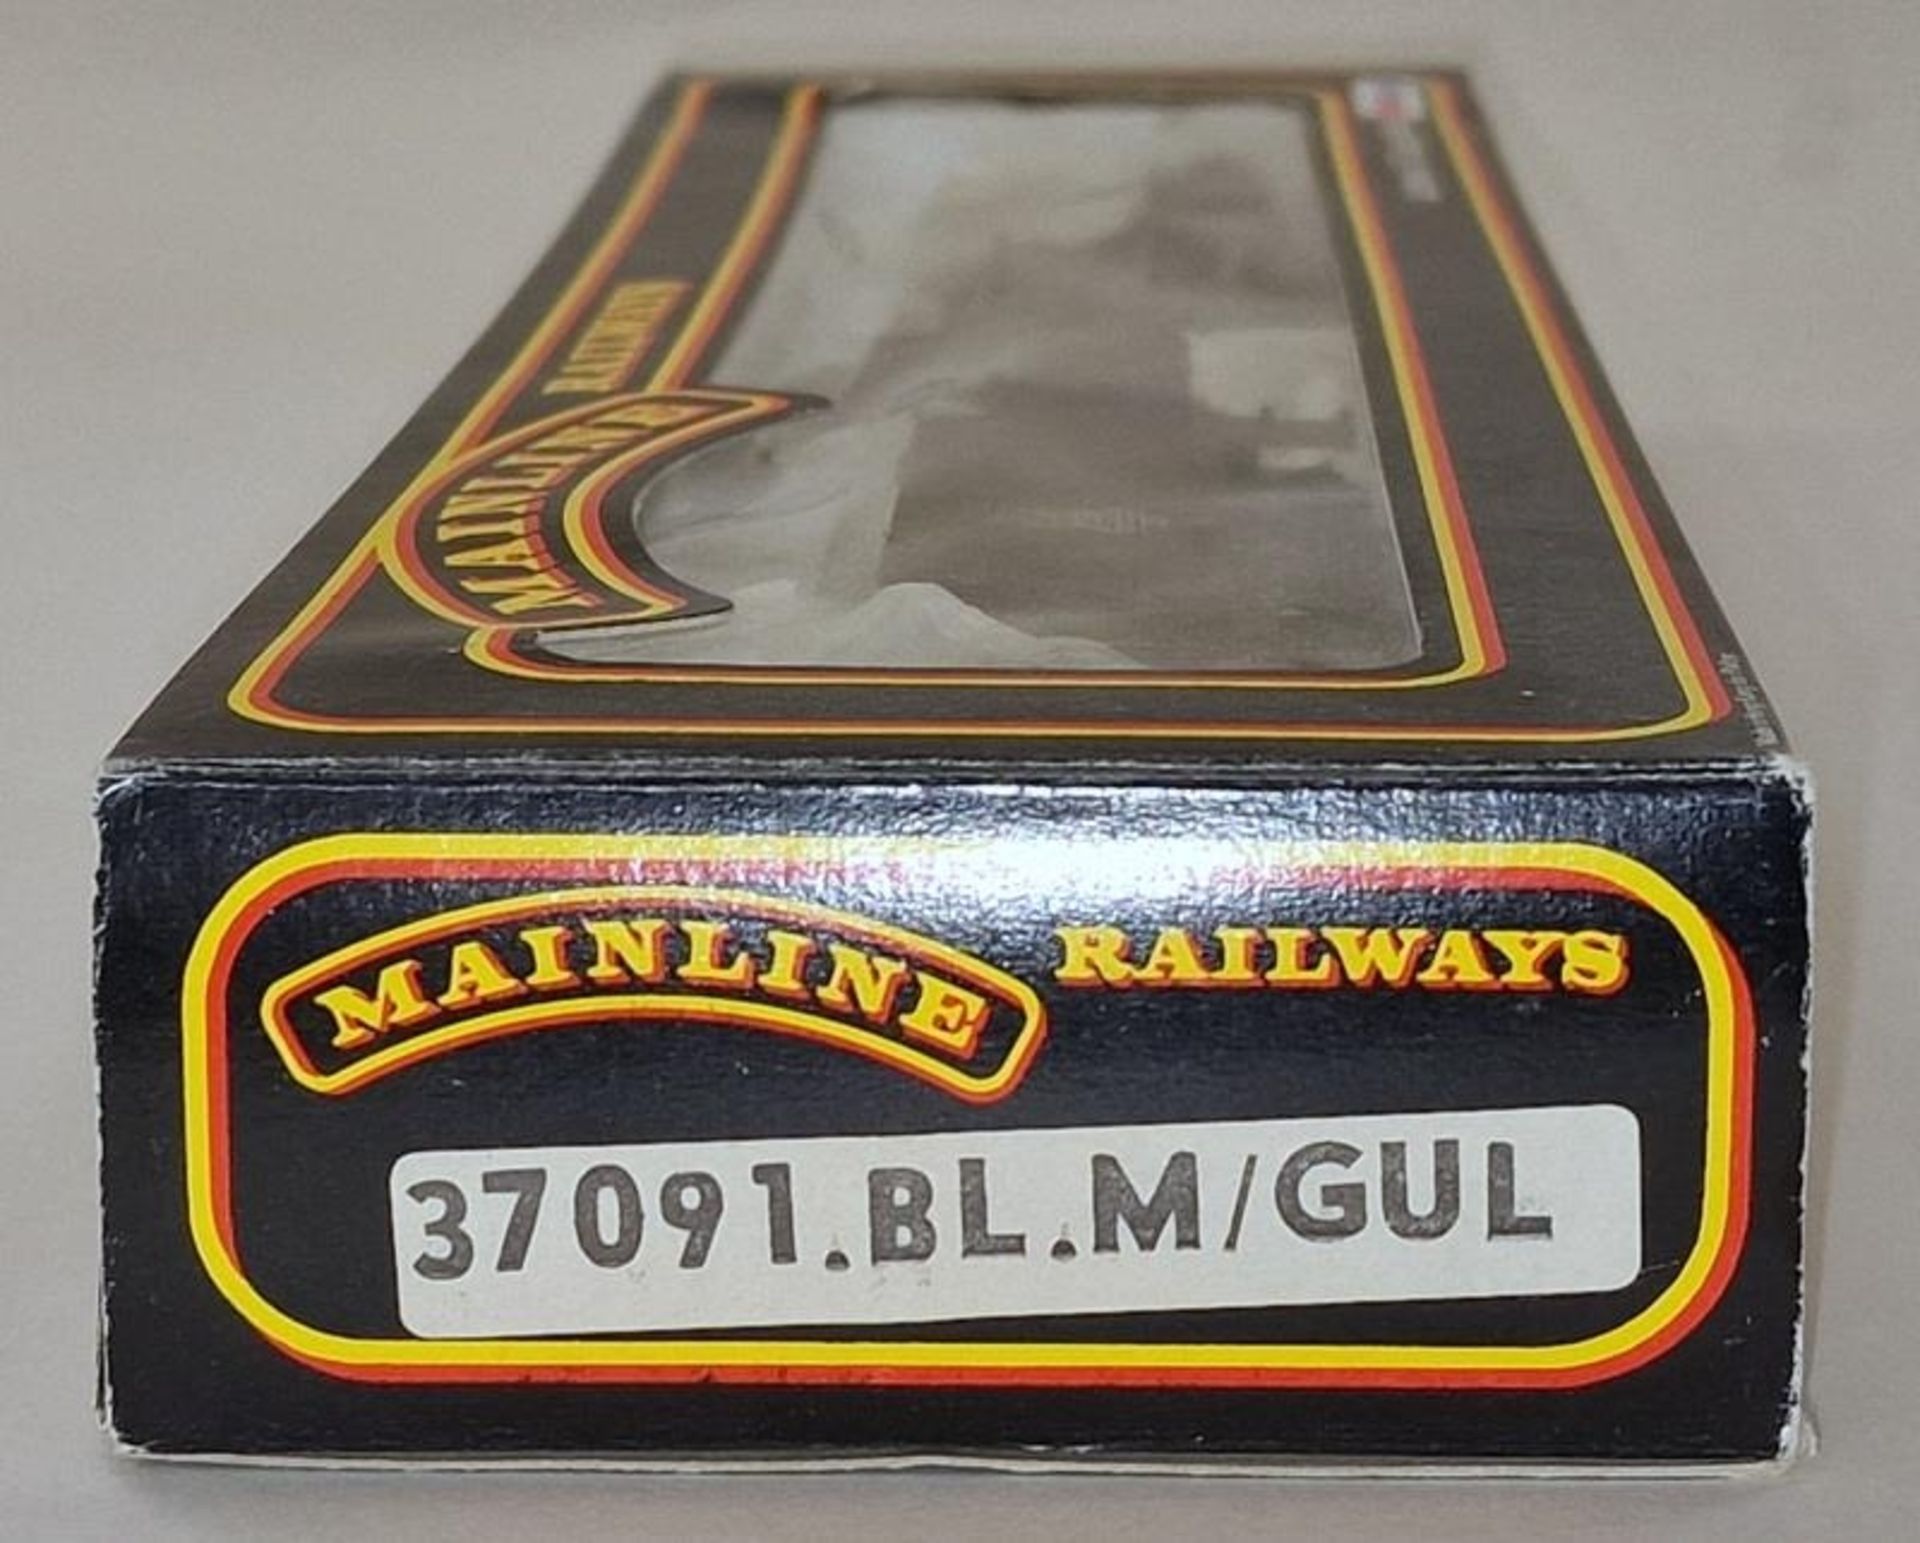 Palitoy Mainline Railways OO Gauge British Railways 5328 Locomotive in unused condition. - Image 3 of 3